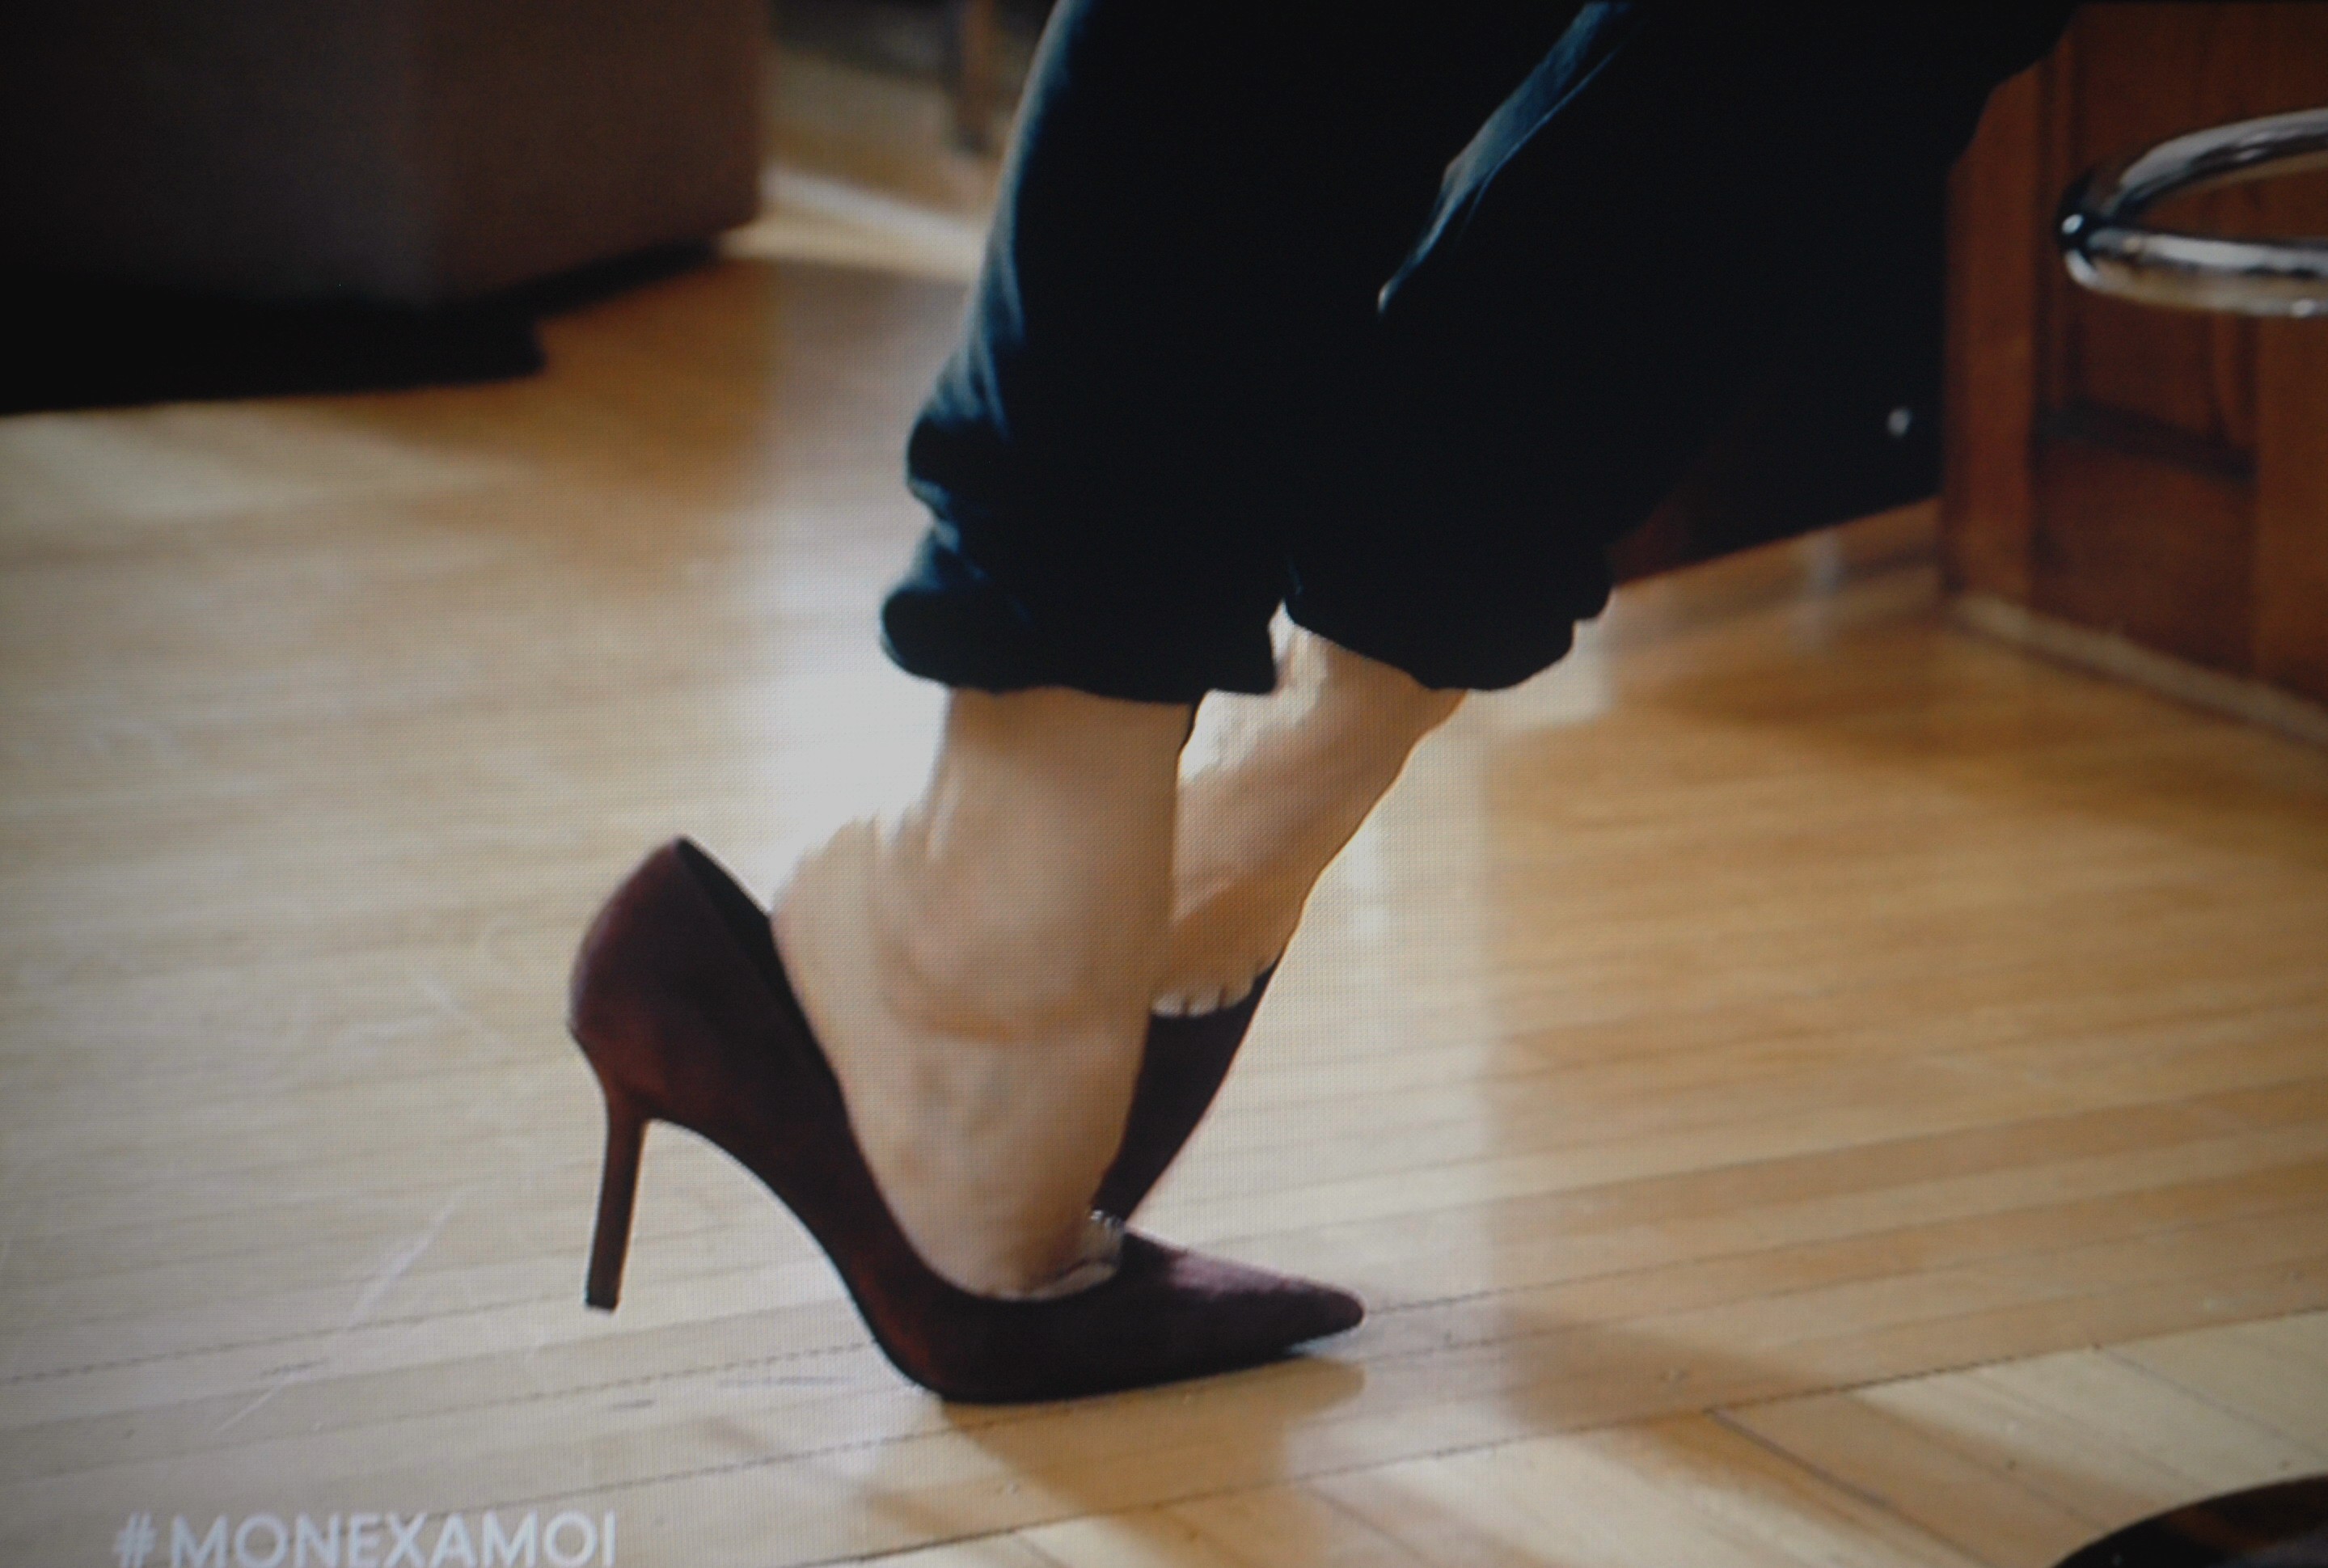 Sophie Desmarais's Feet